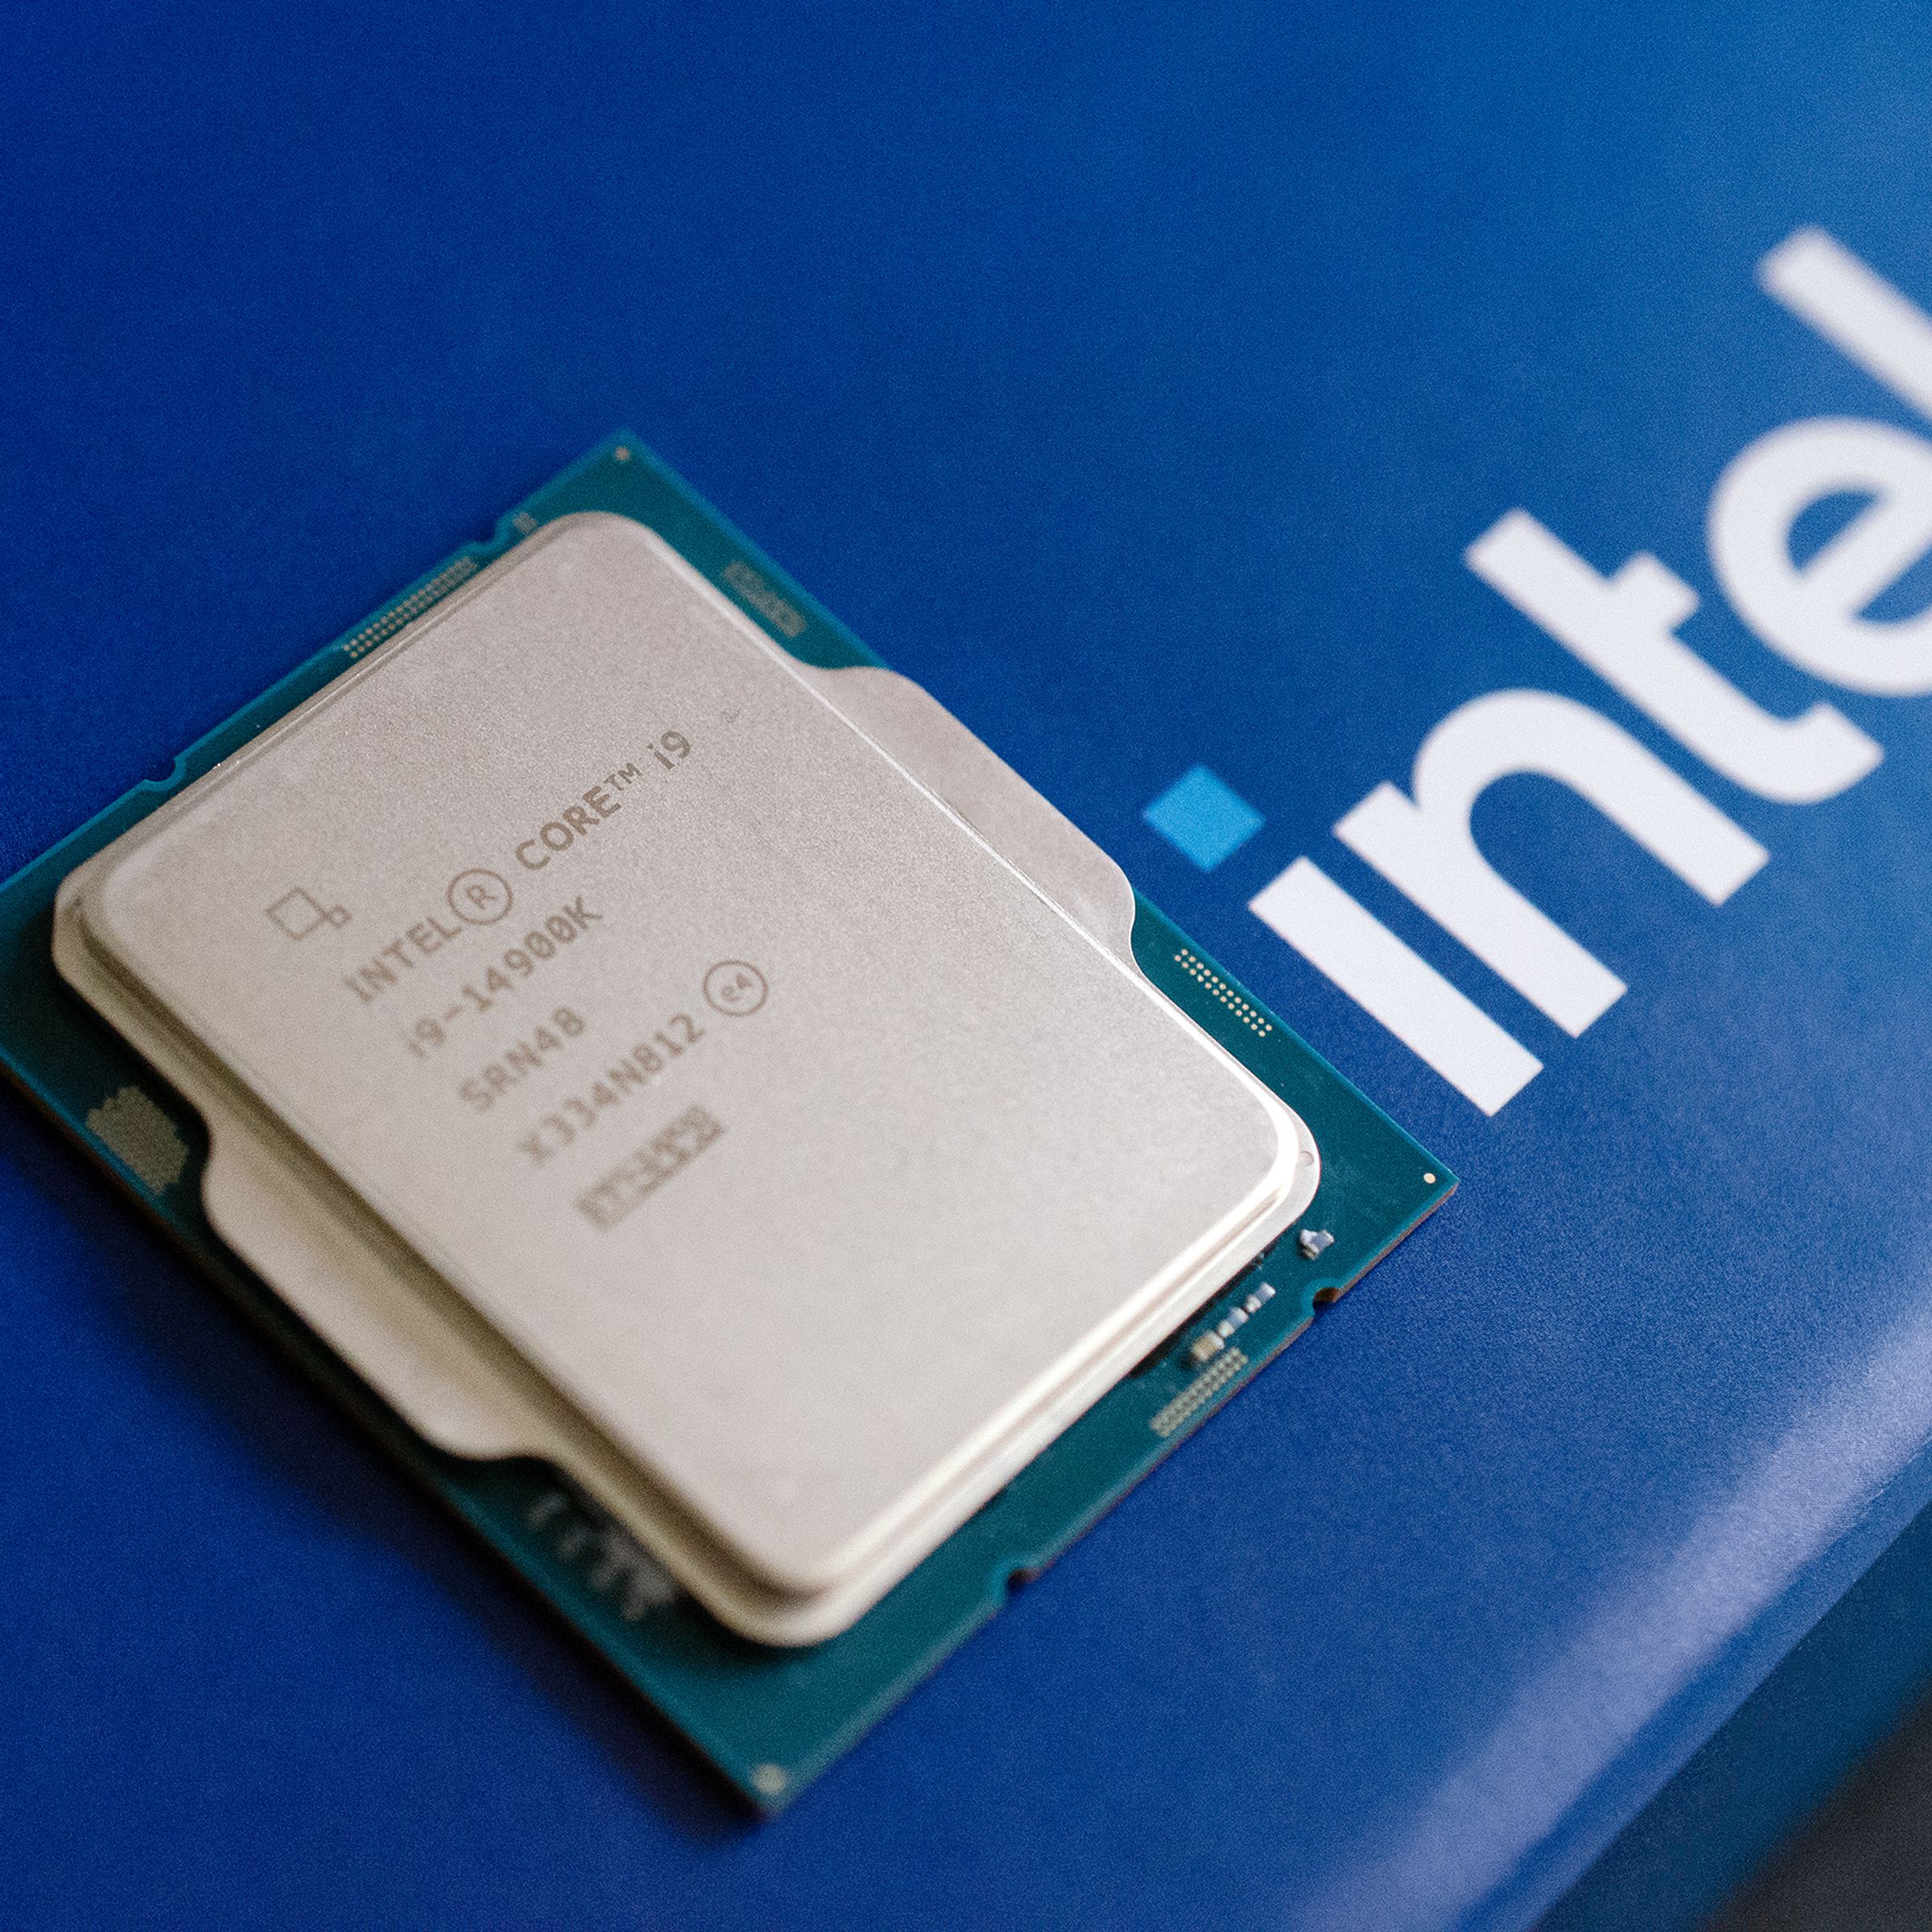 A 14th Gen Intel Core i9 processor on a blue Intel box